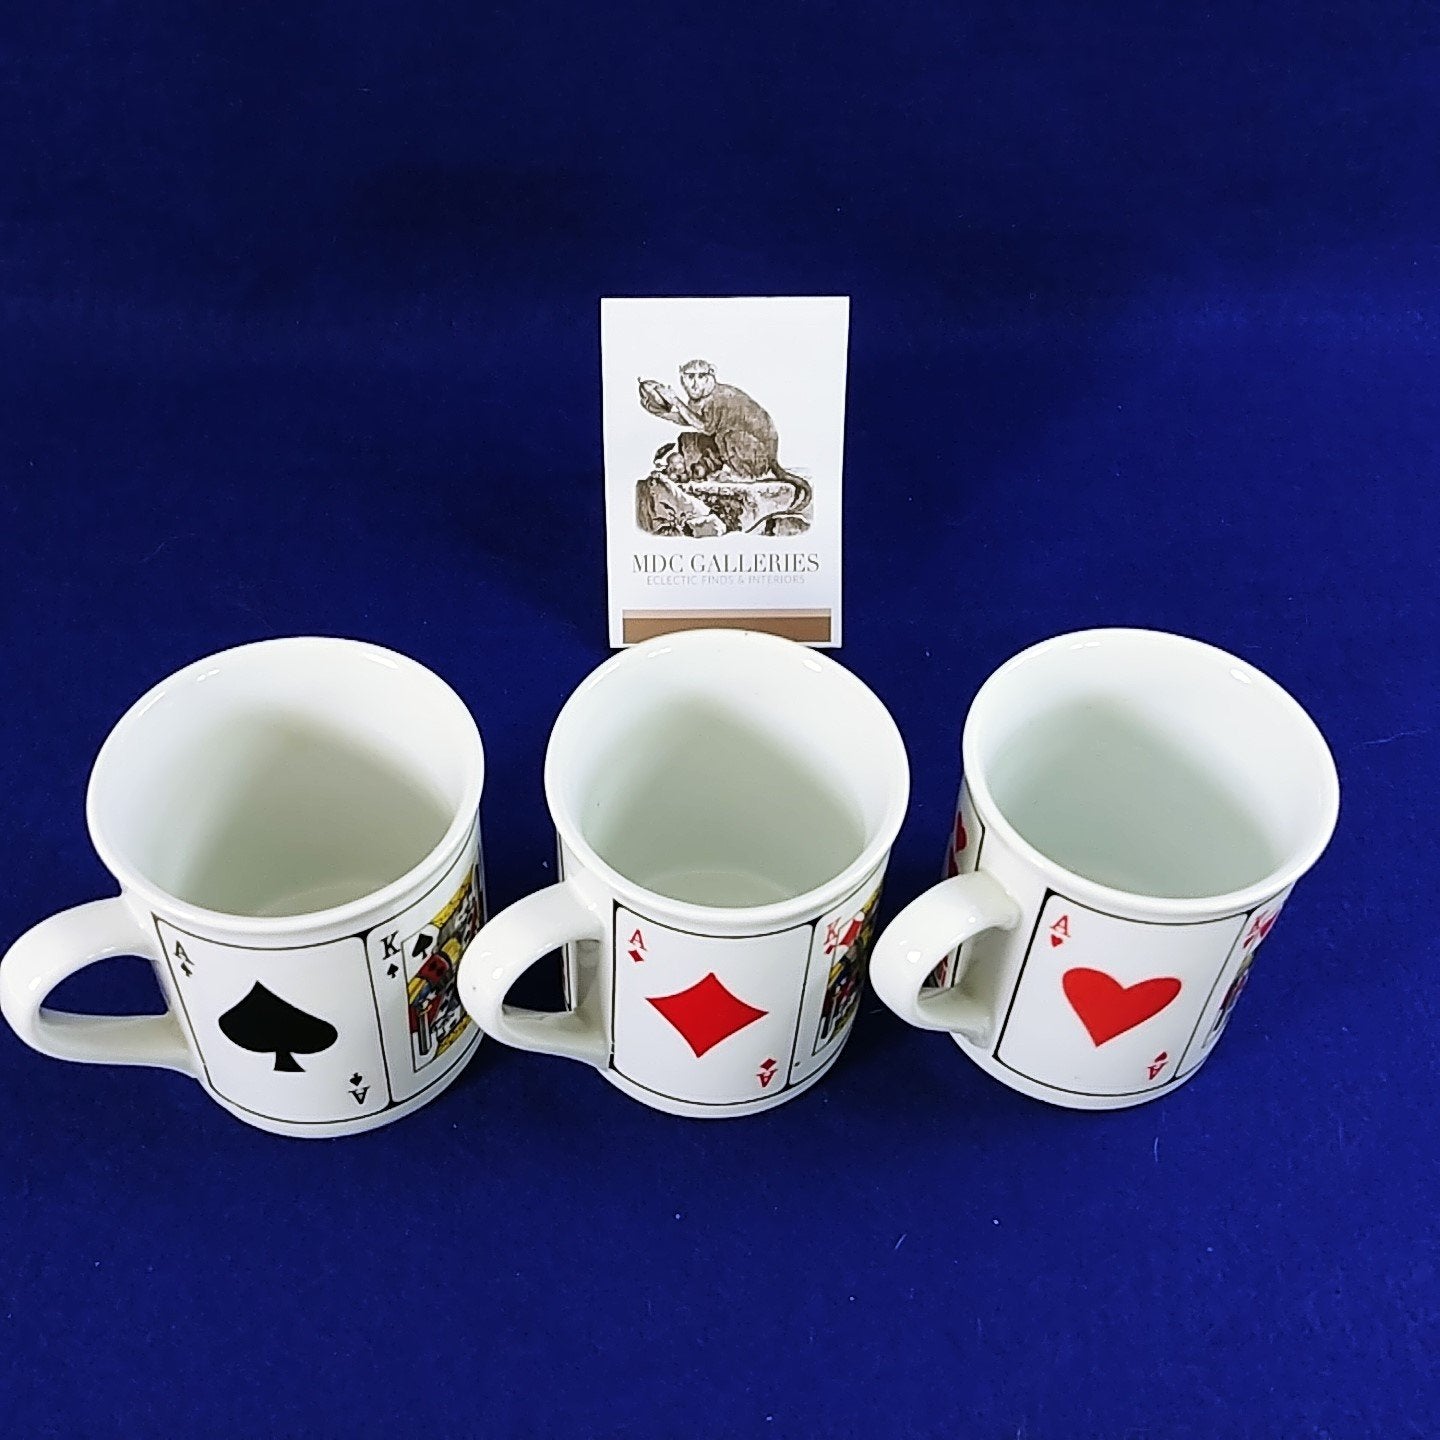 Coffee Mugs Cups Royal Flush Poker Jobar International Diamonds Hearts Spades